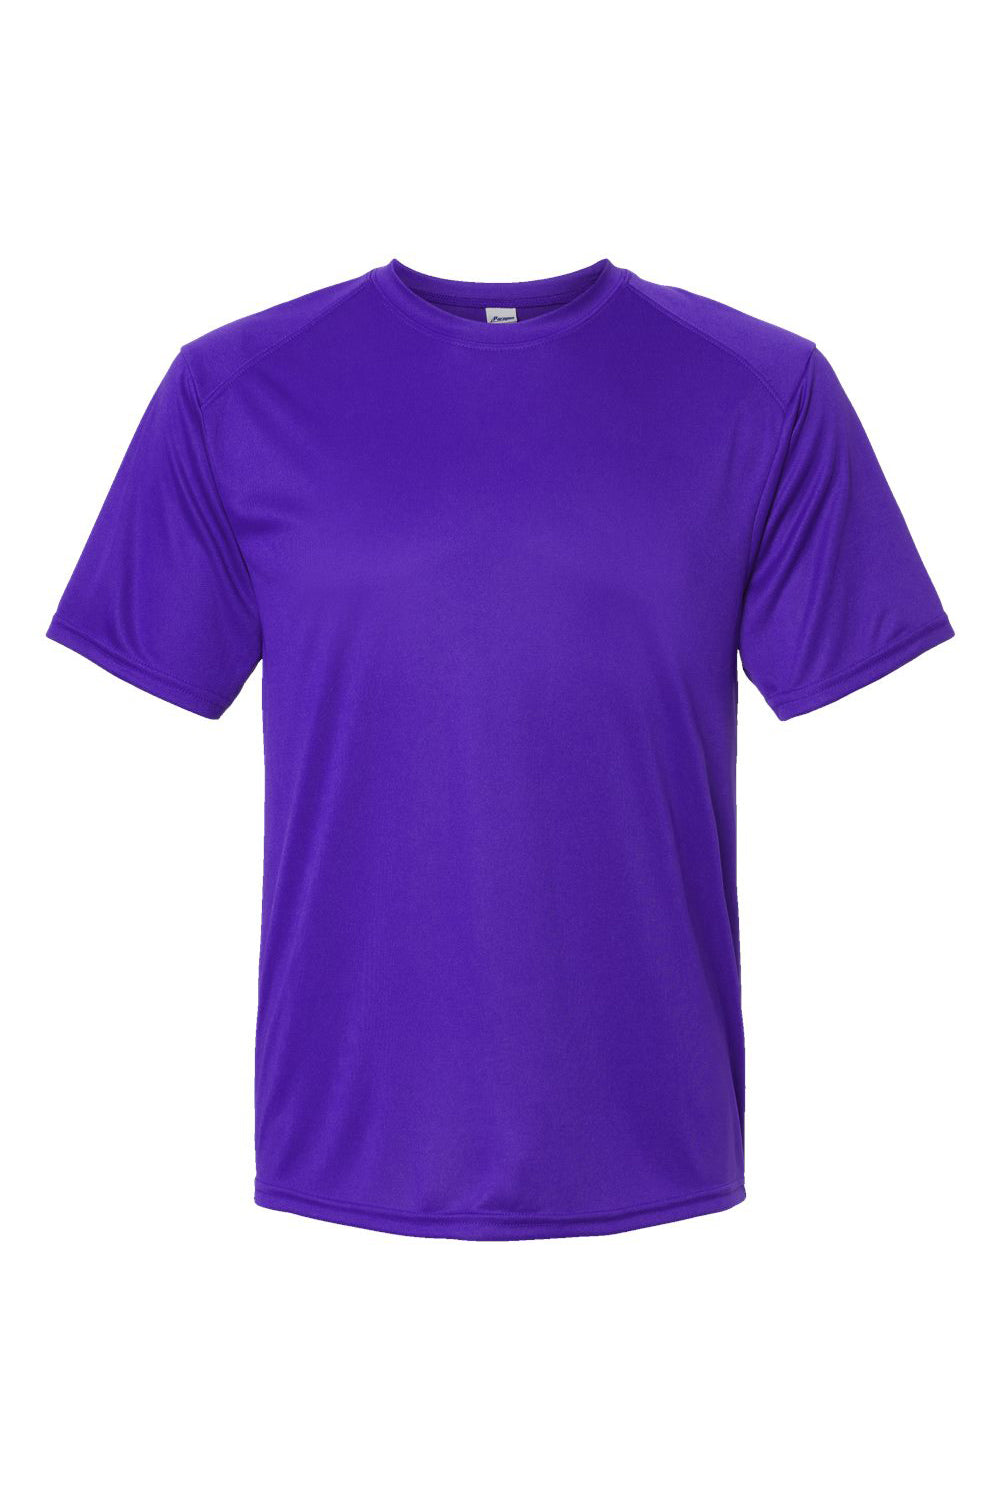 Paragon 200 Mens Islander Performance Short Sleeve Crewneck T-Shirt Purple Flat Front